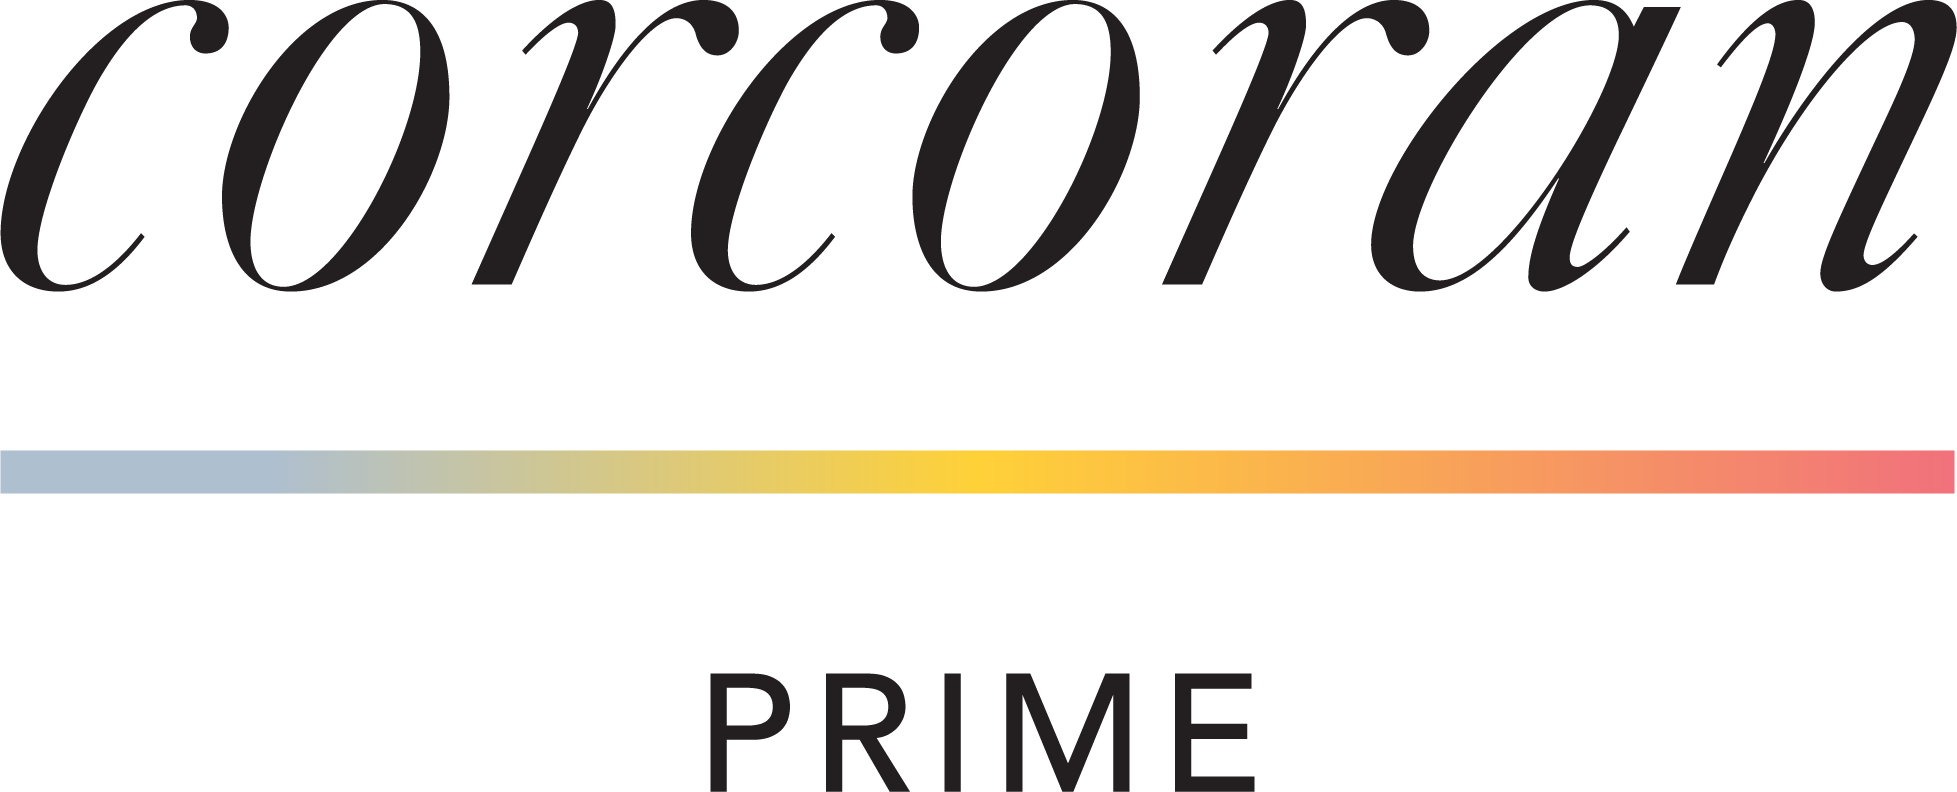 Corcoran Prime logo